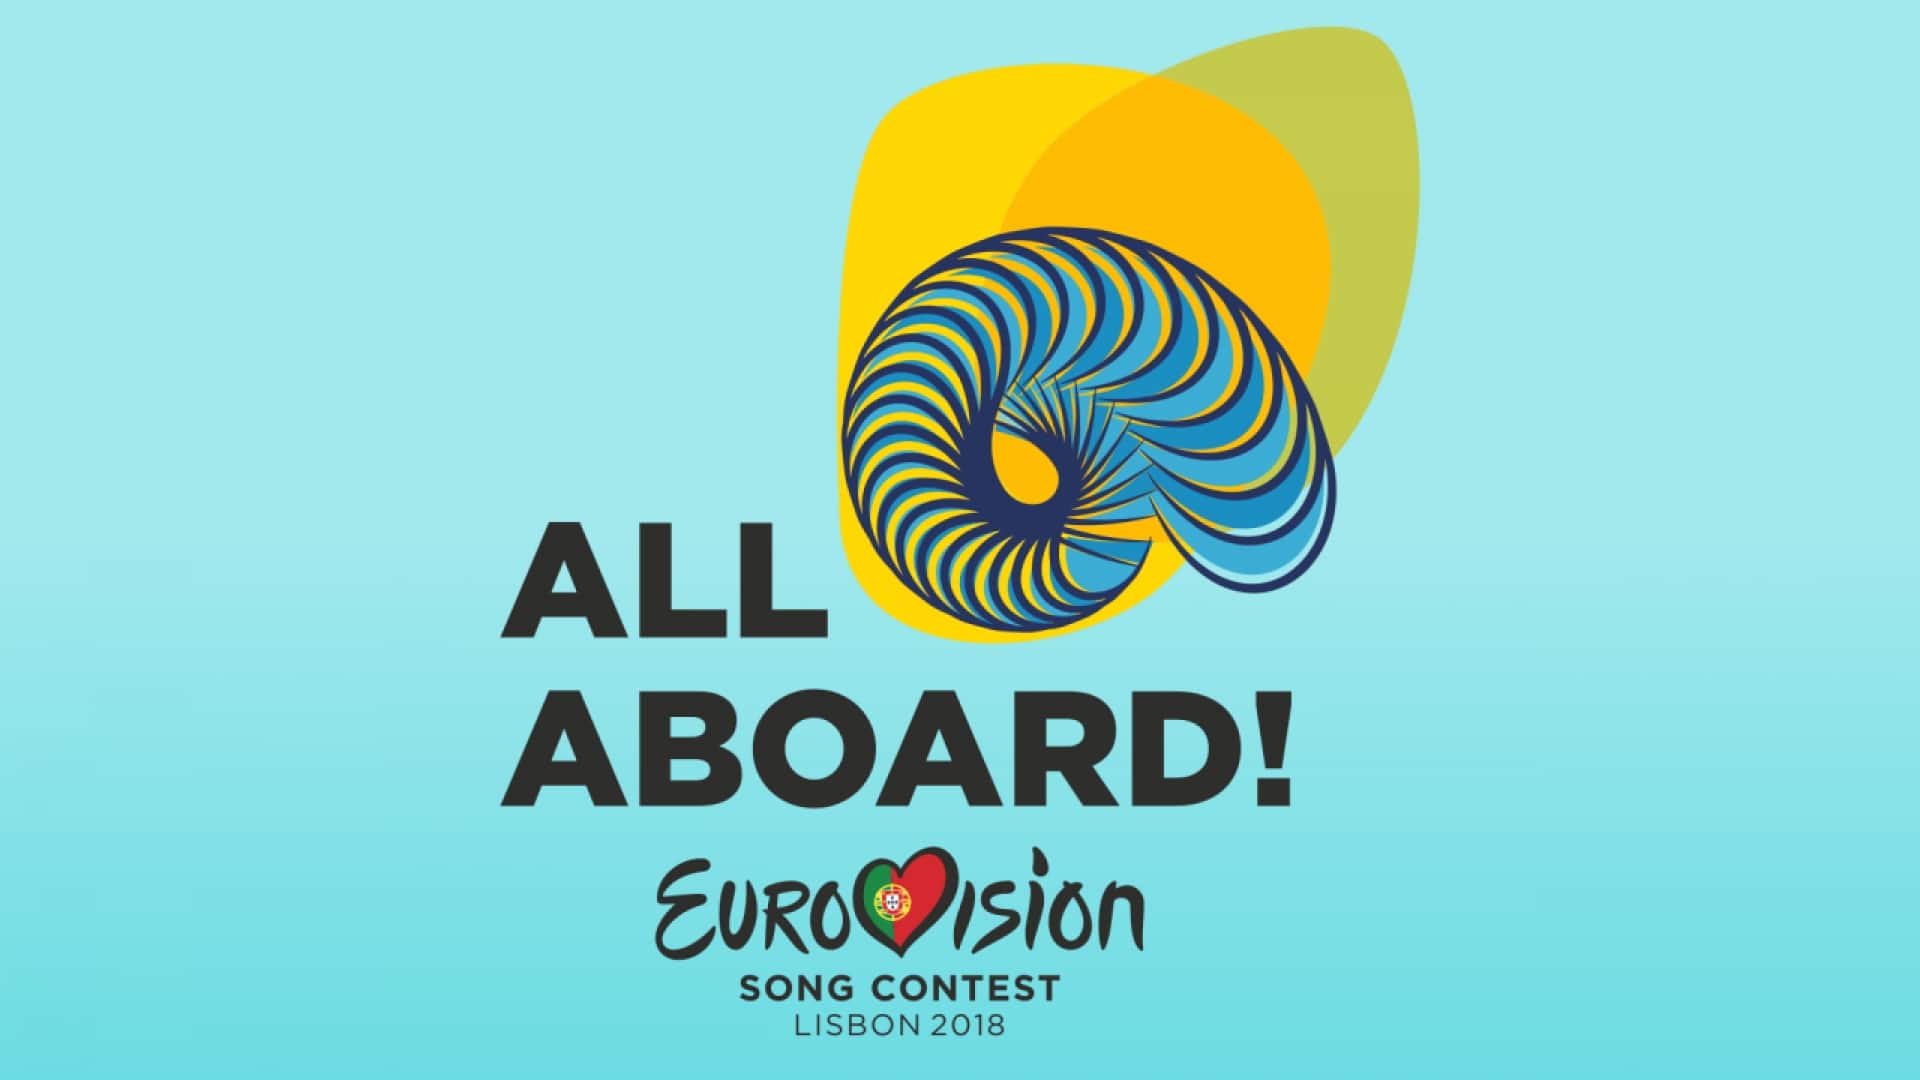 Eurovision Song Contest 2018 Logo - Key Art (16-9)